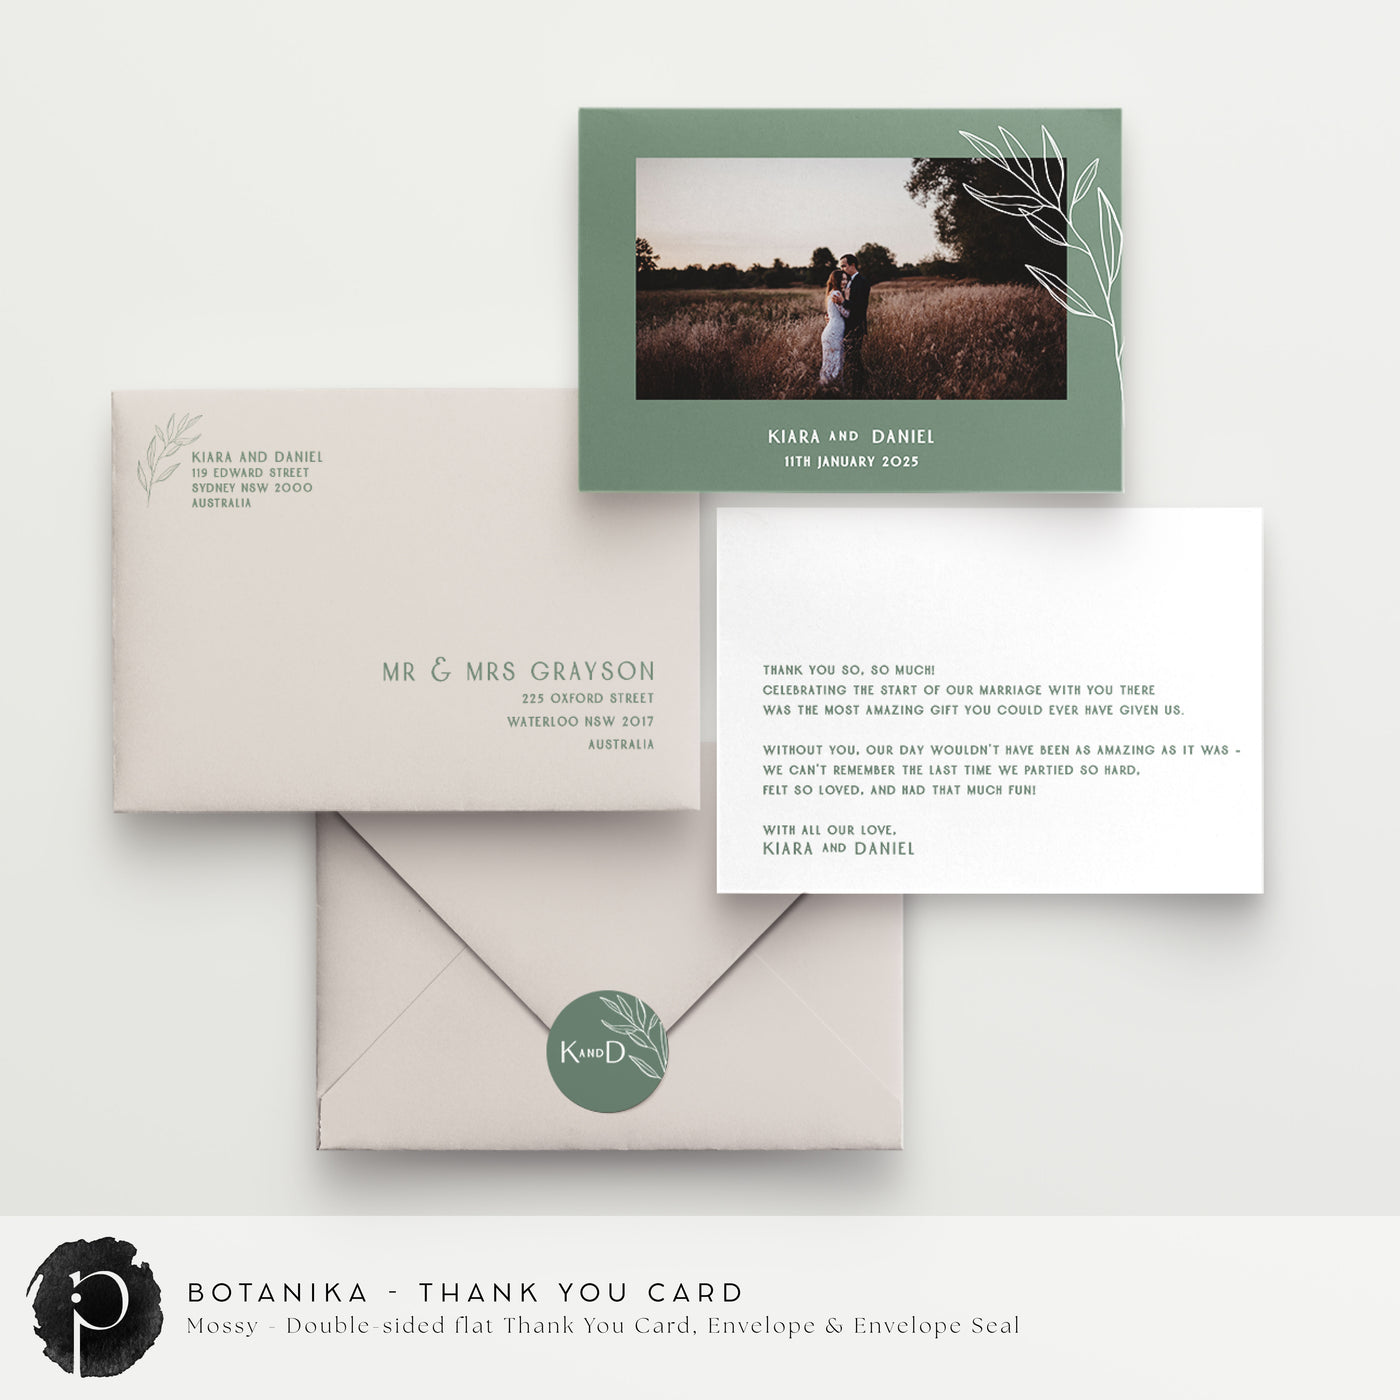 Botanika - Wedding Thank You Cards